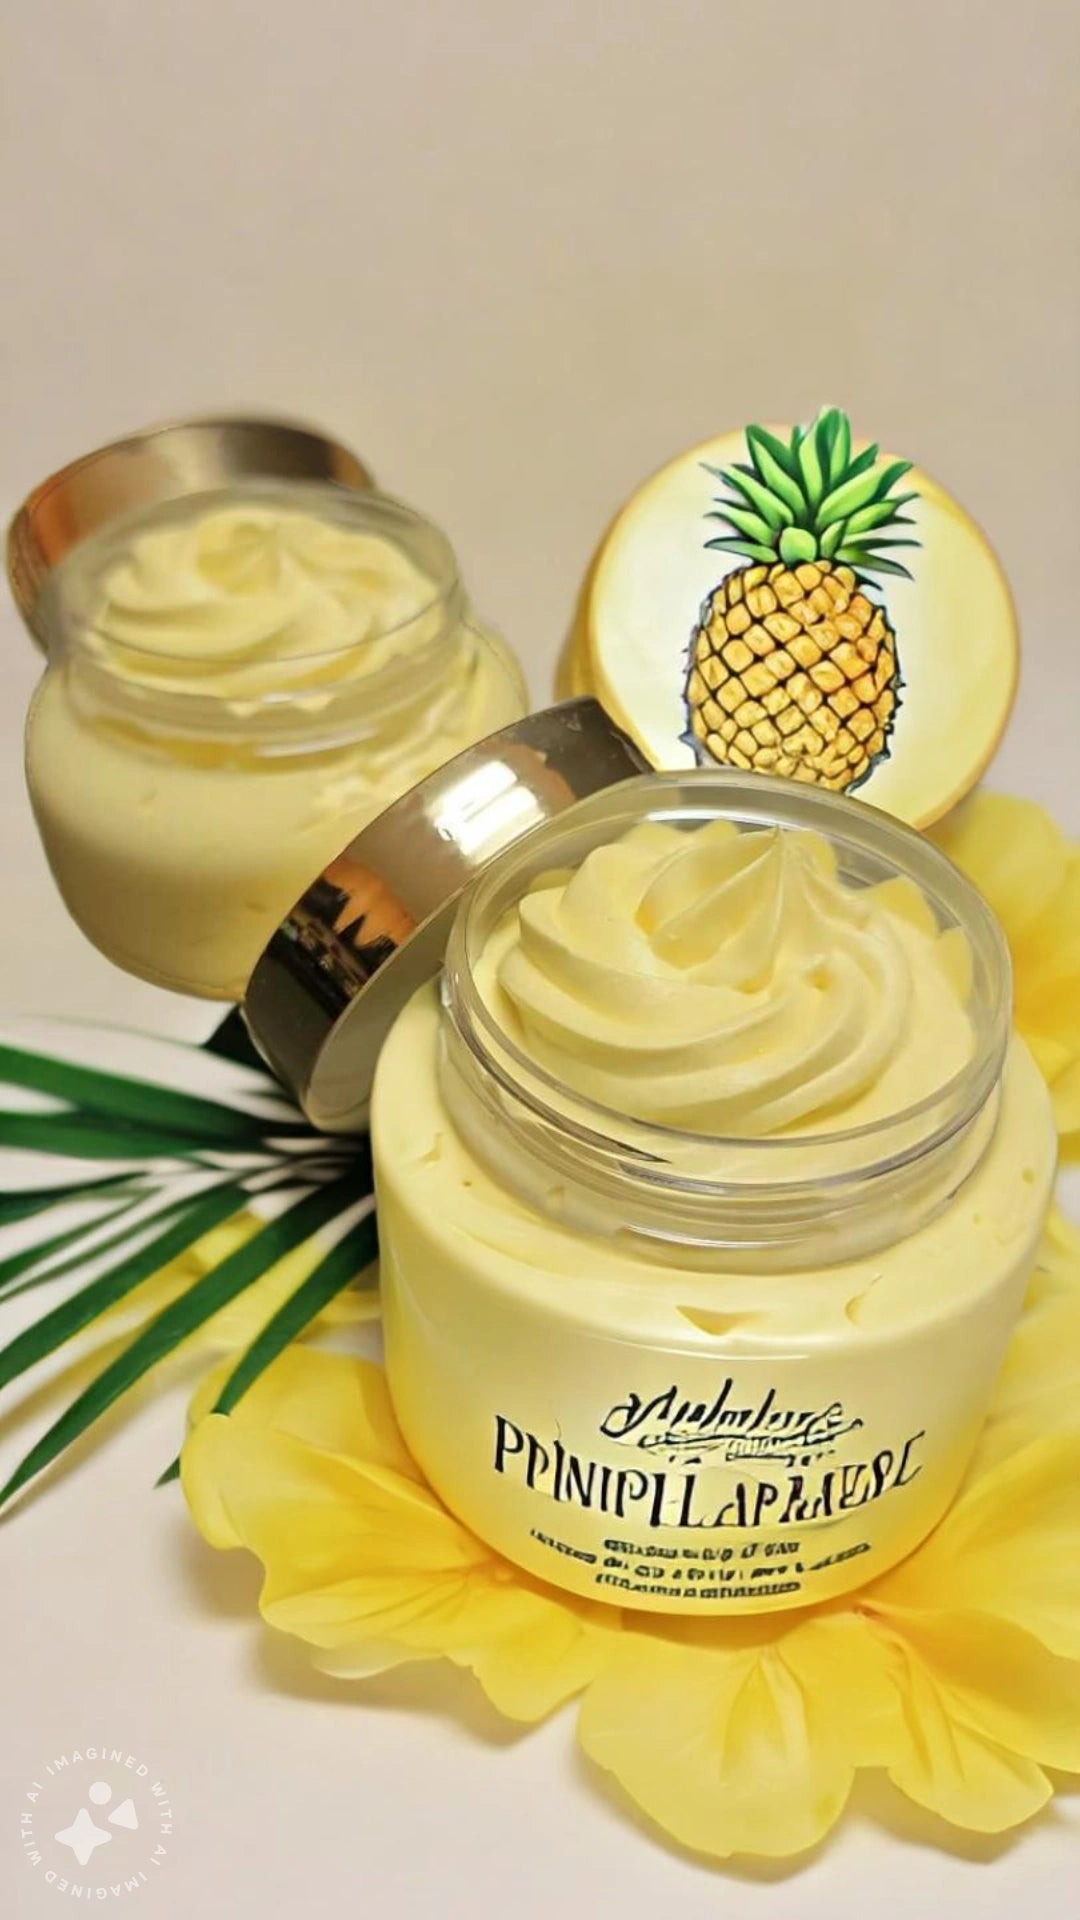 Pineapple paradise body butter 🍍